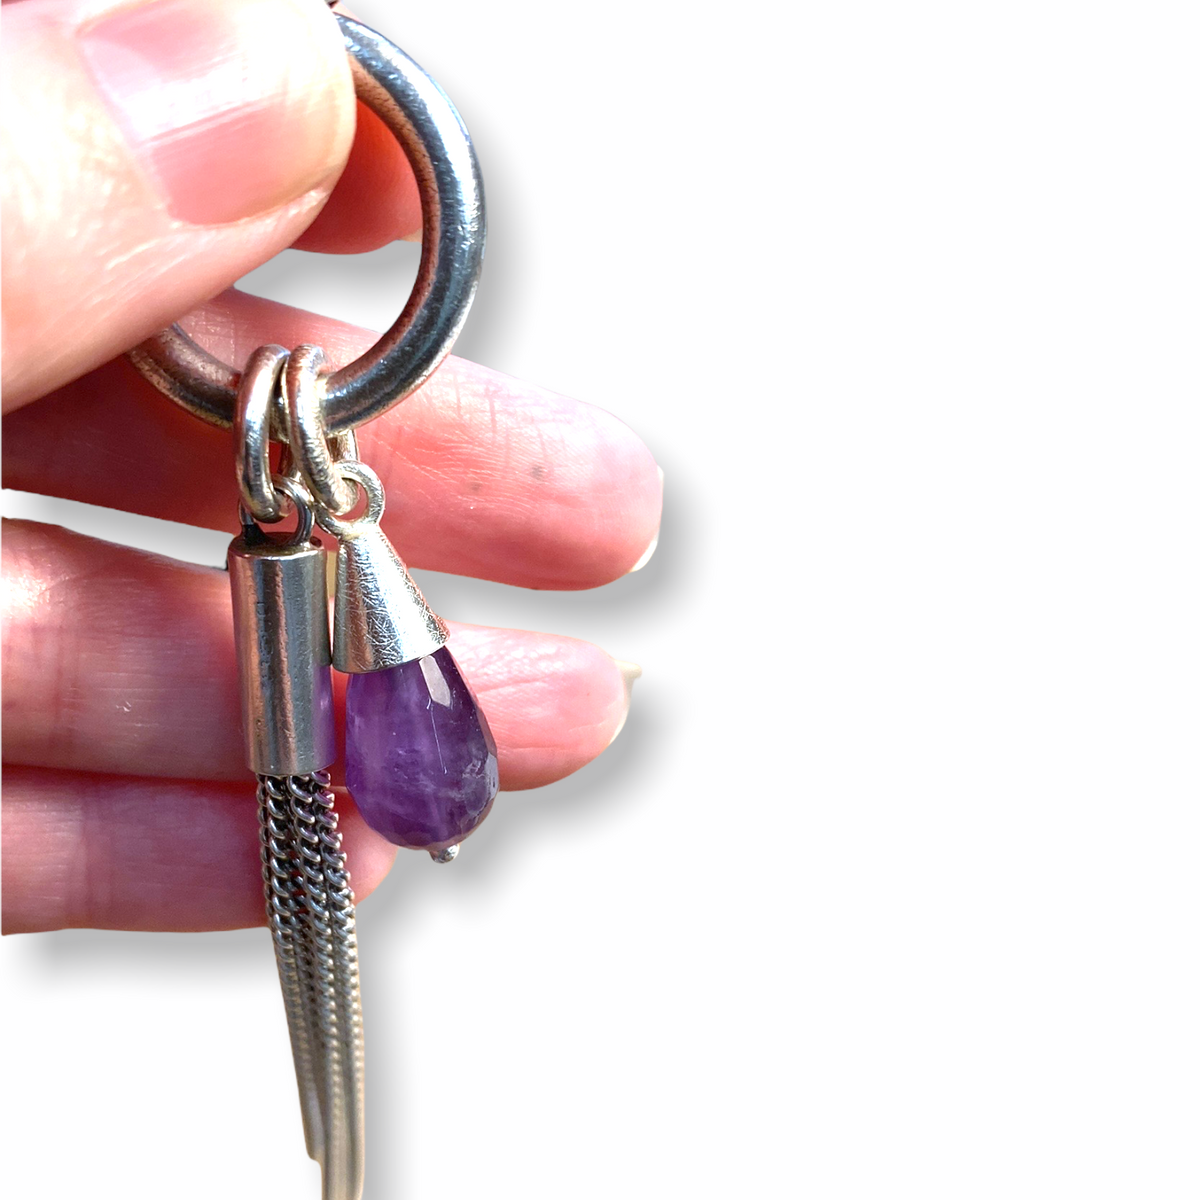 Jewel Drop Charm | Silver Pendant, Small | Purple Amethyst